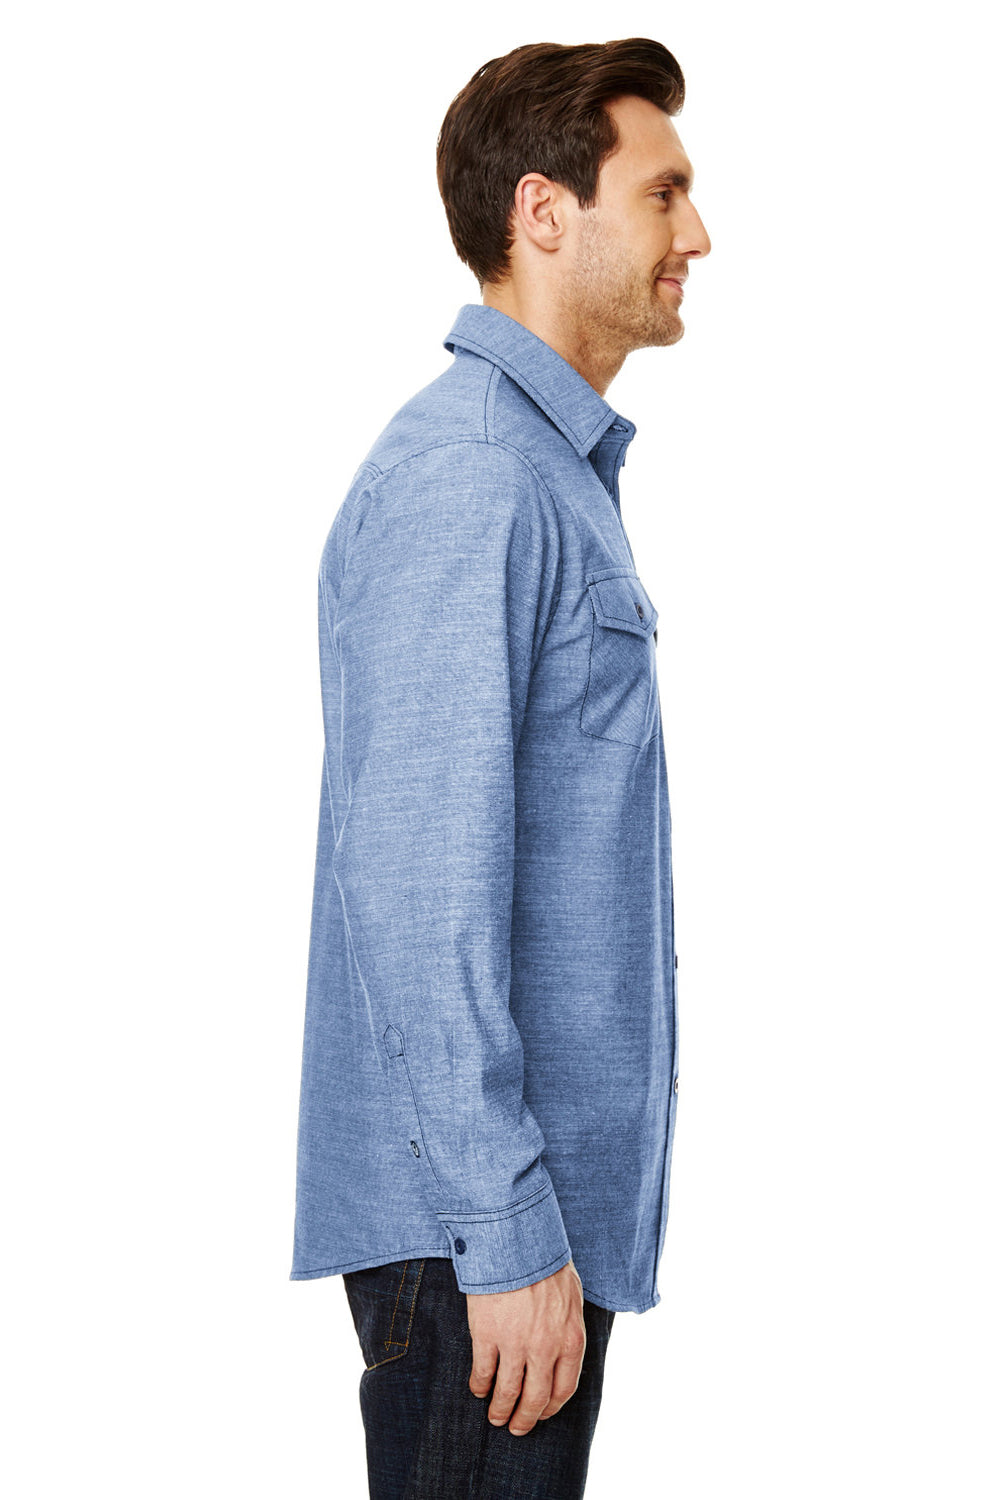 Burnside 8255 Mens Long Sleeve Button Down Shirt w/ Double Pockets Light Denim Model Side